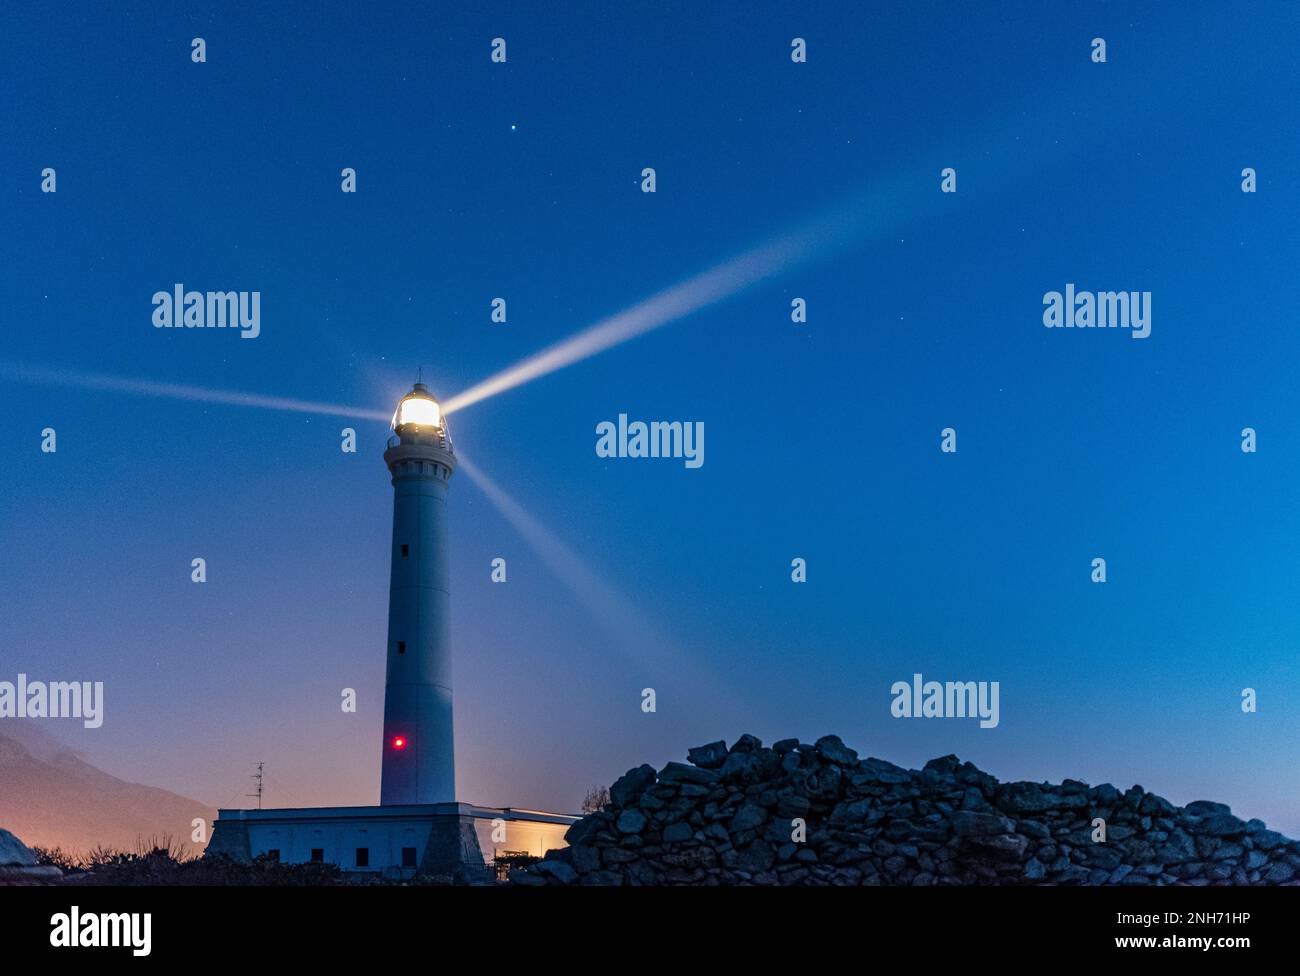 The lighthouse of San Vito lo Capo at dusk, Sicily Stock Photo